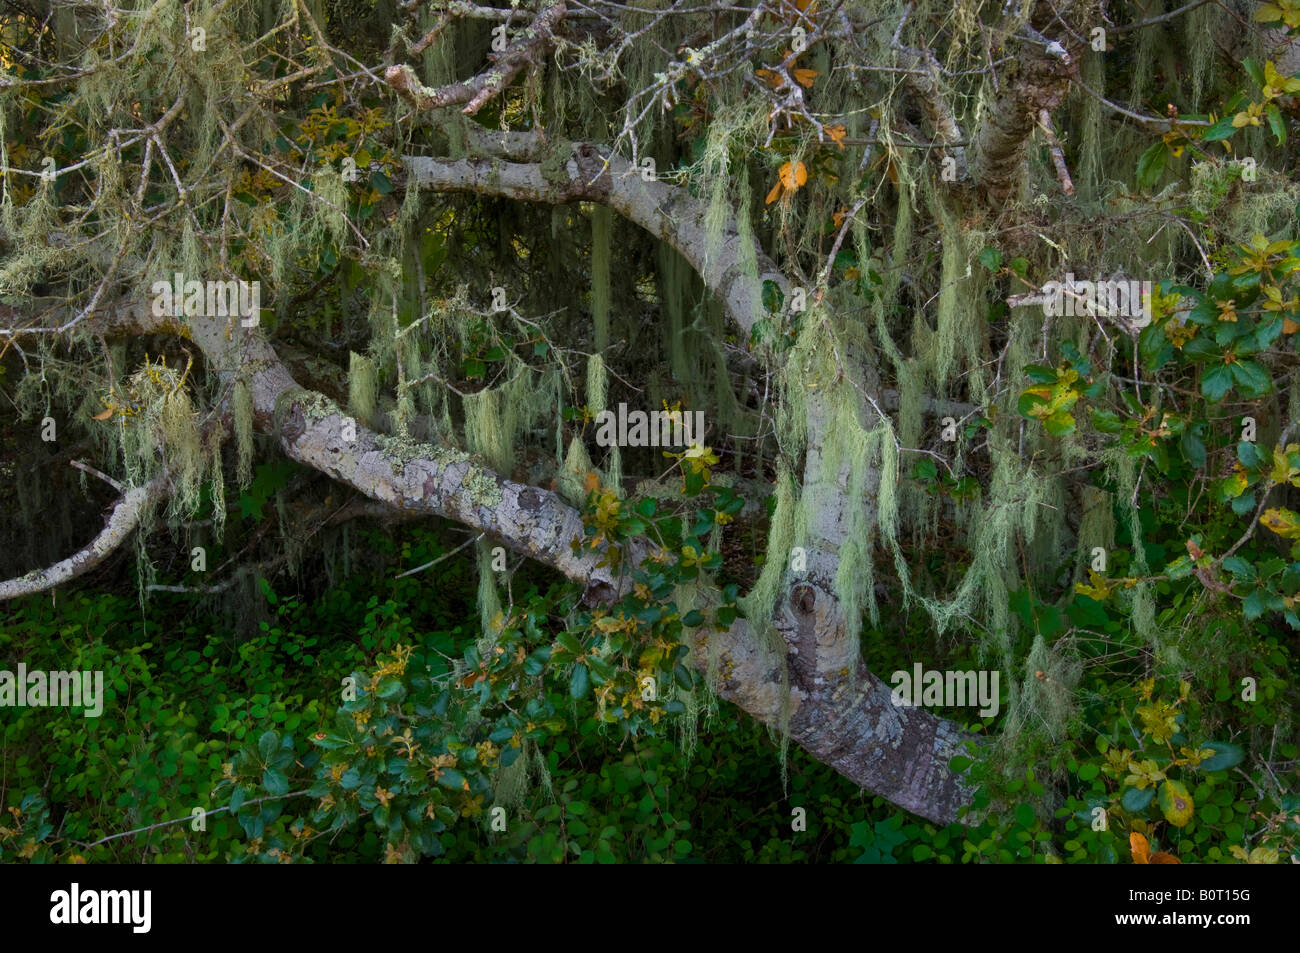 Dwarf pygmy oak trees El Moro Elfin Forest Natural Area Los Osos California Stock Photo